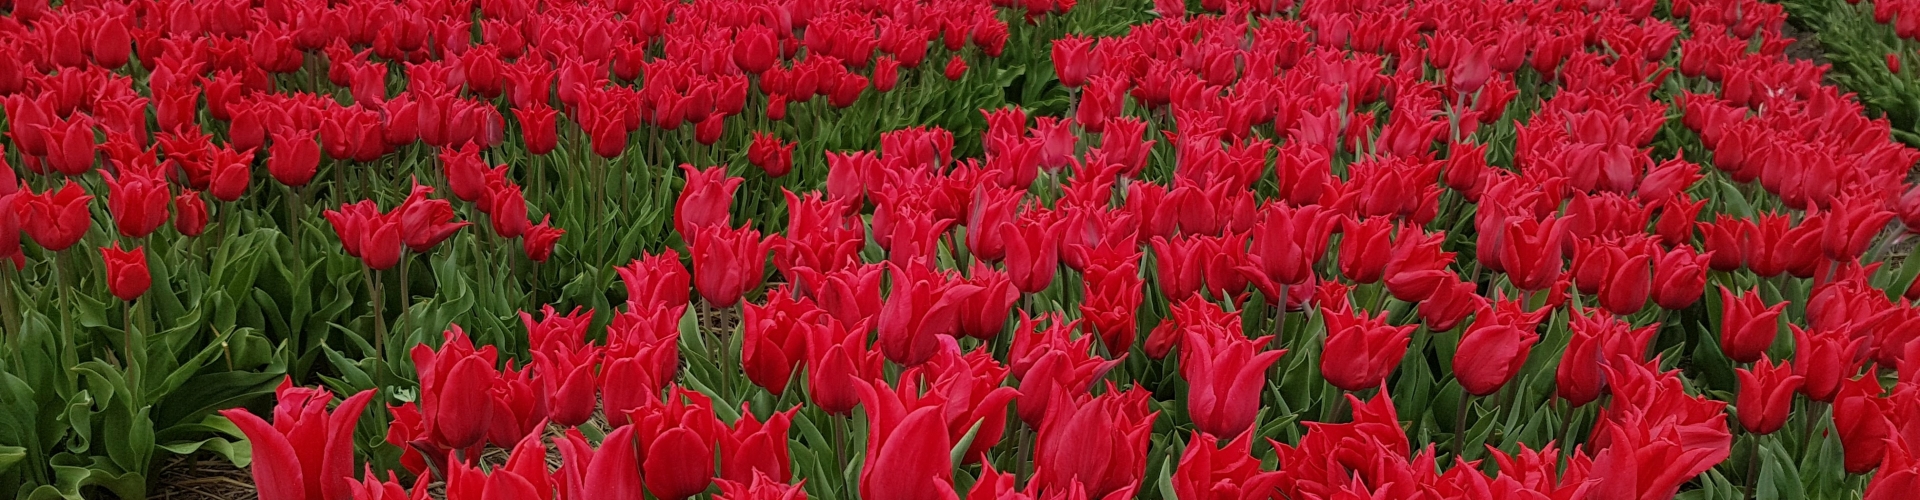 Lily shaped red Tulips in field near Keukenhof Holland